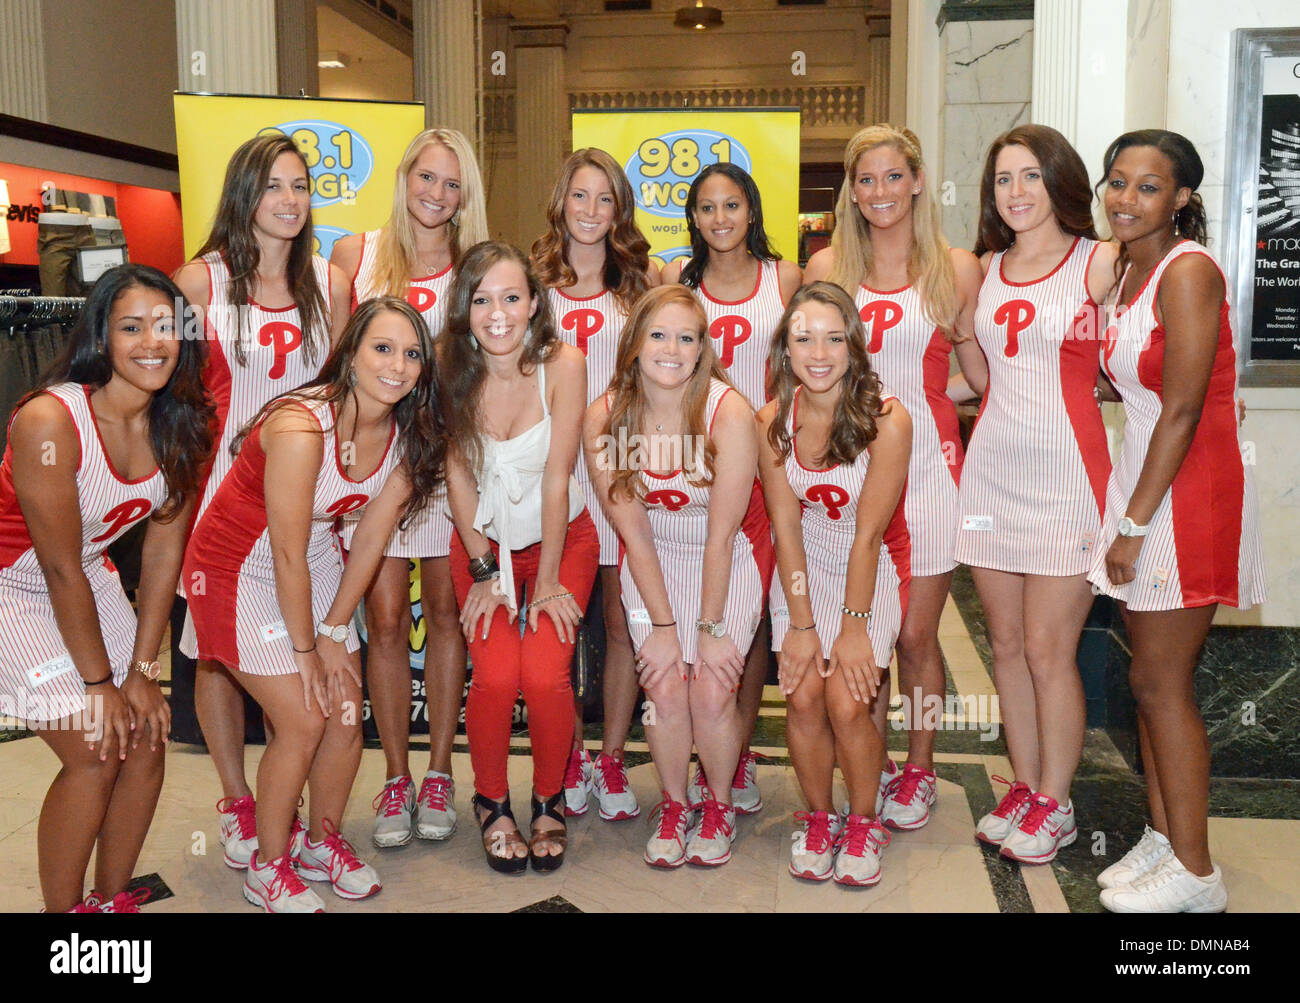 Phillies Ballgirls reveal new uniform at Macy's Center City